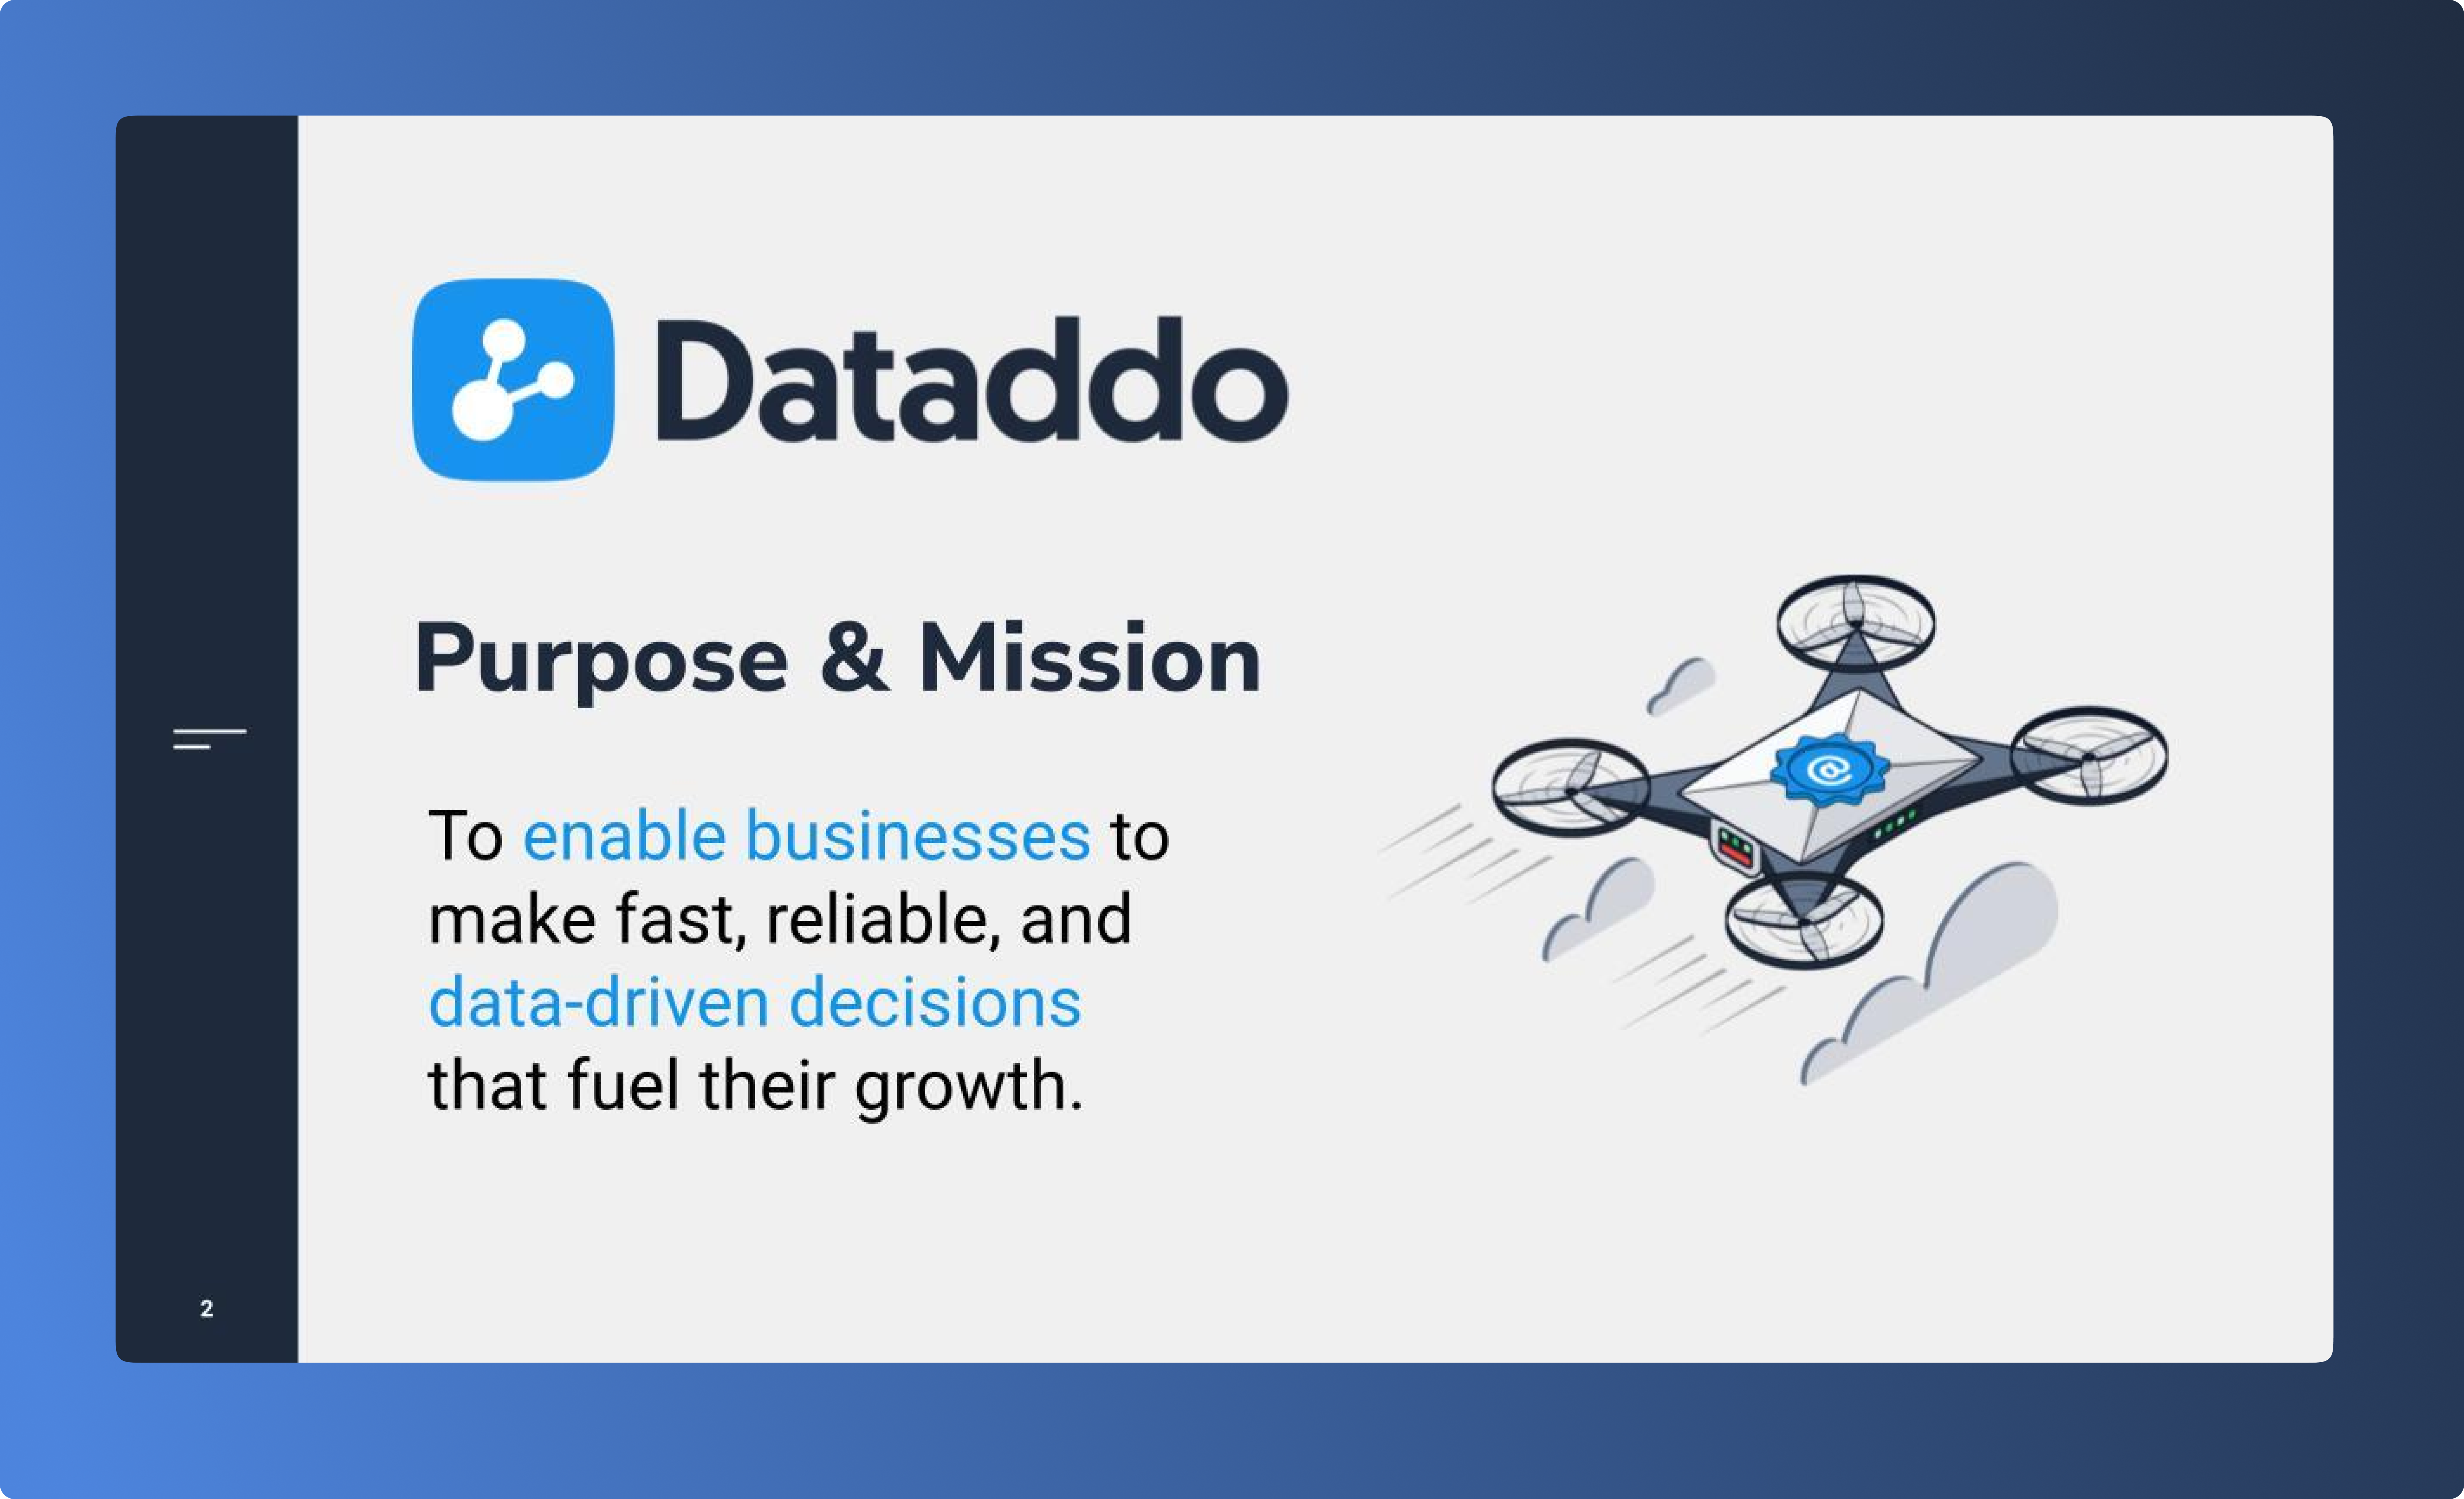 dataddo purpose